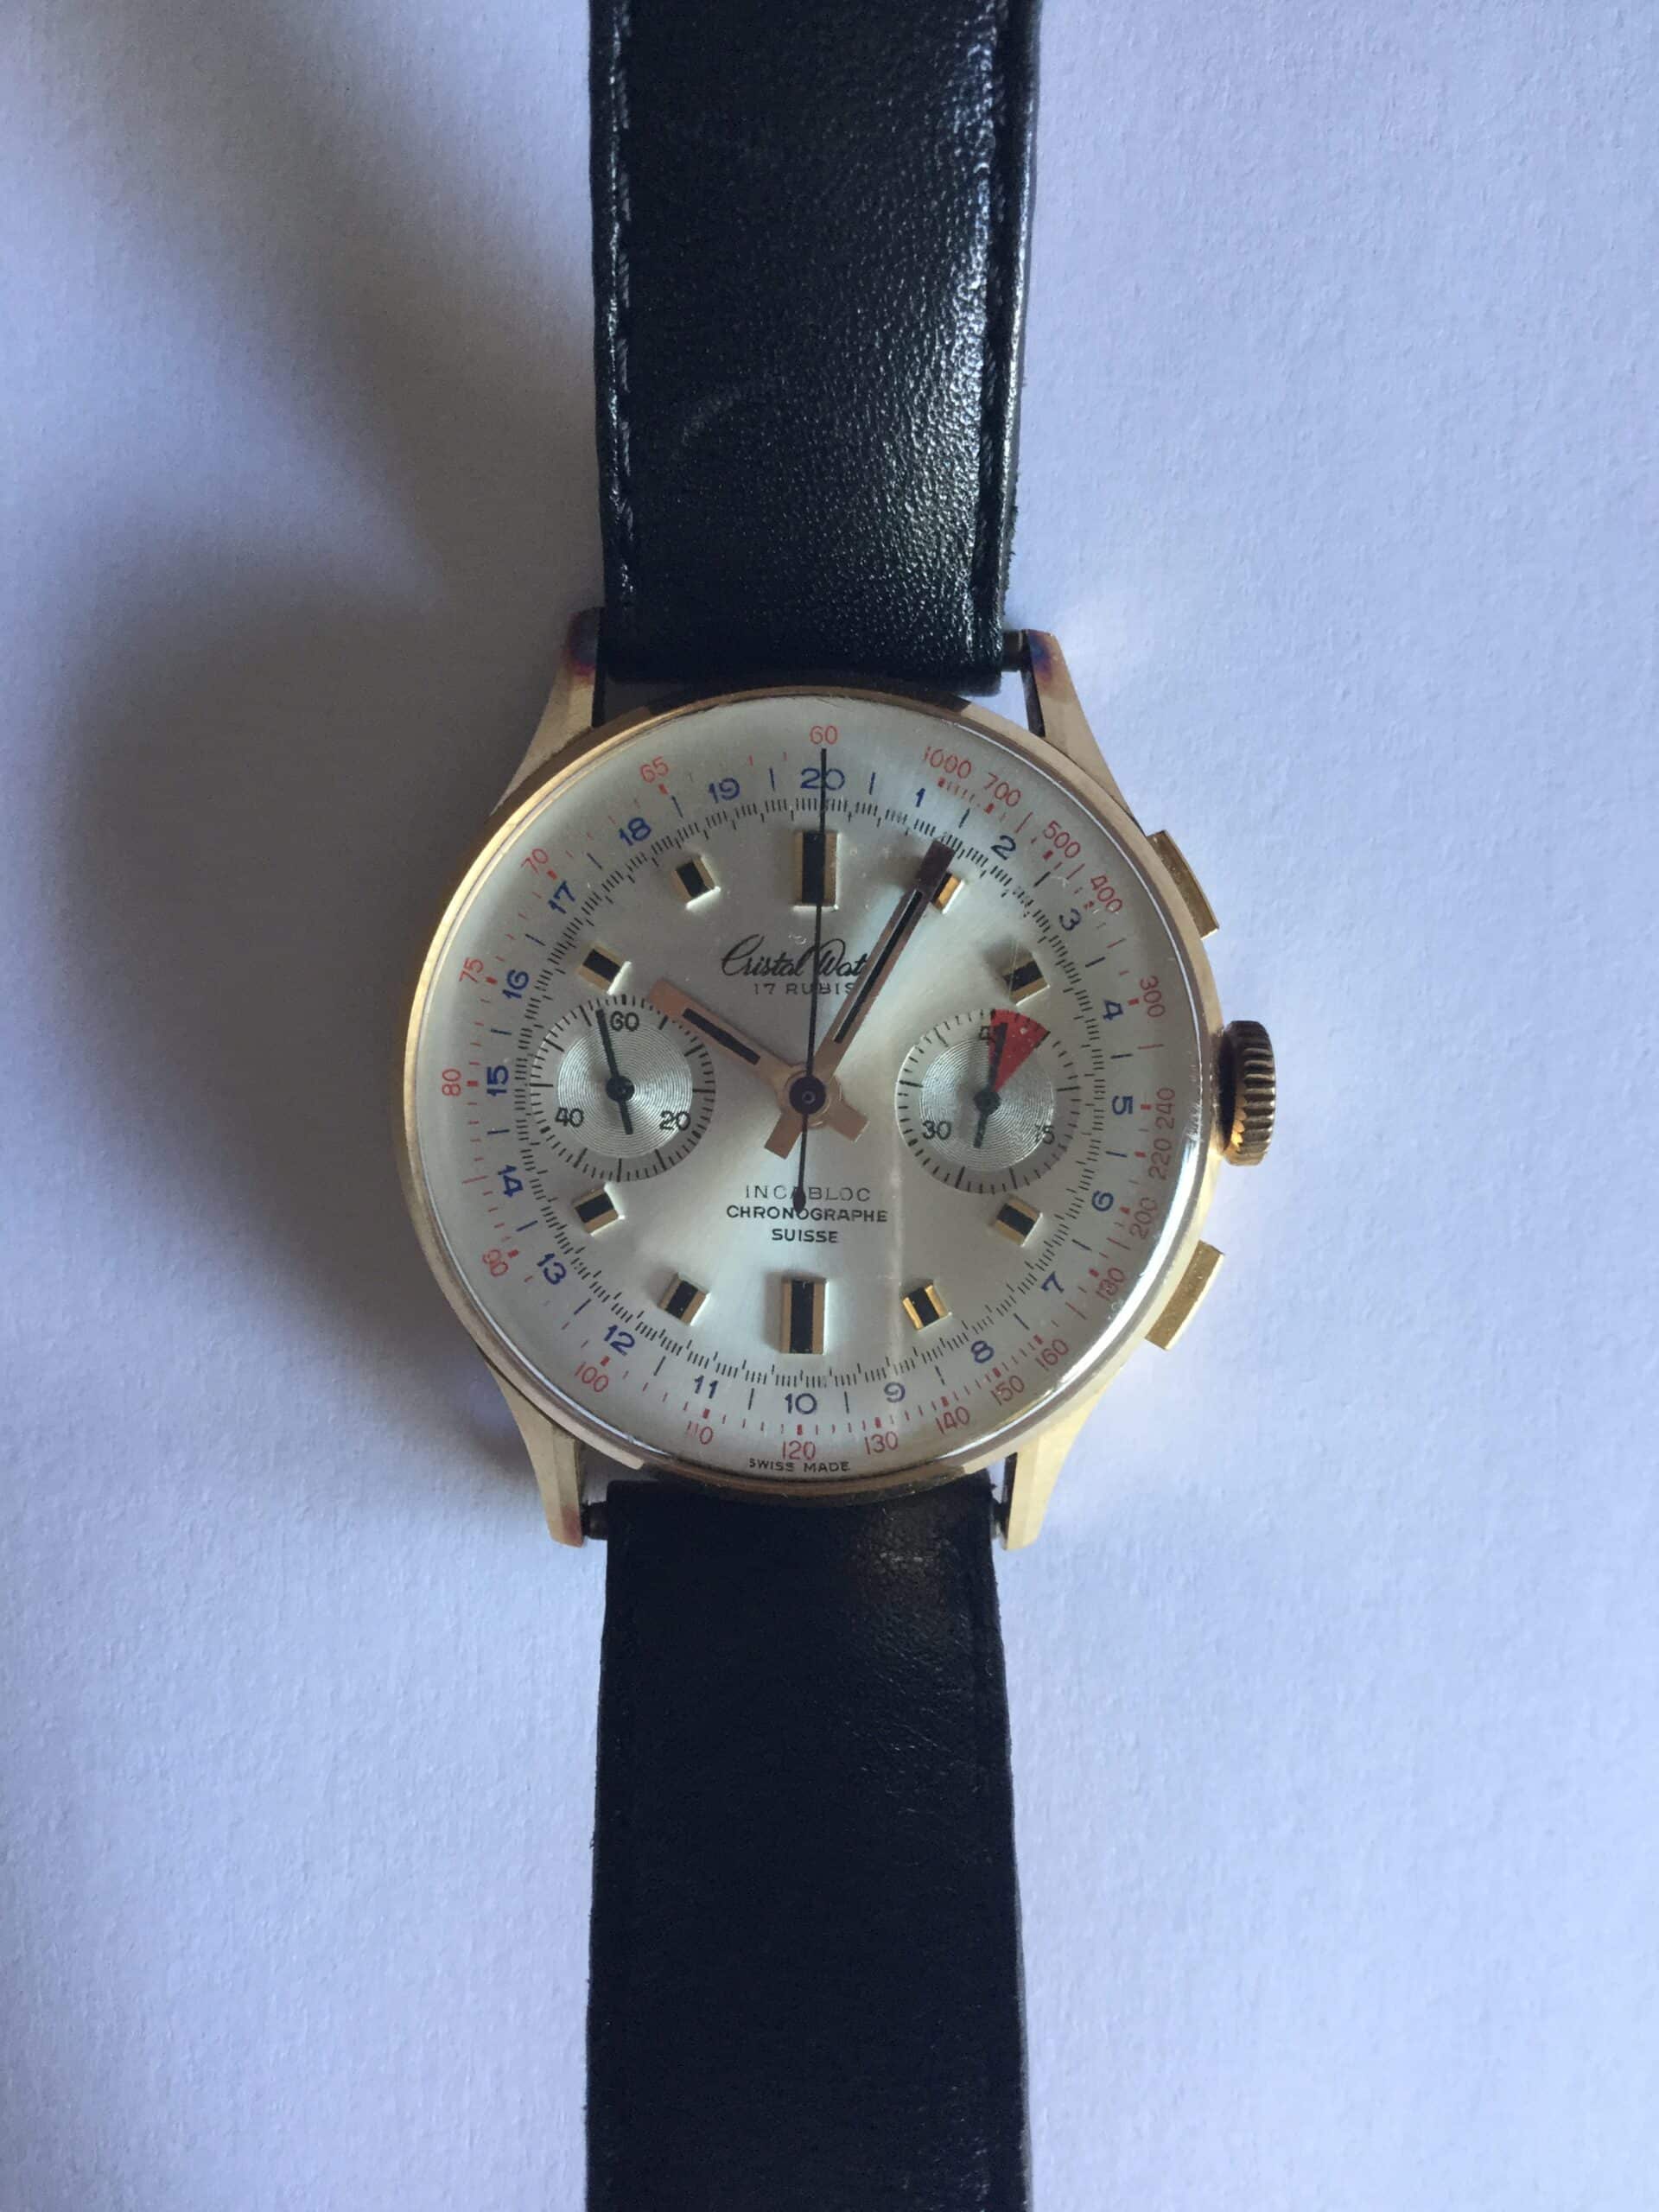 cristal watch 17 rubis incabloc chronographe suisse